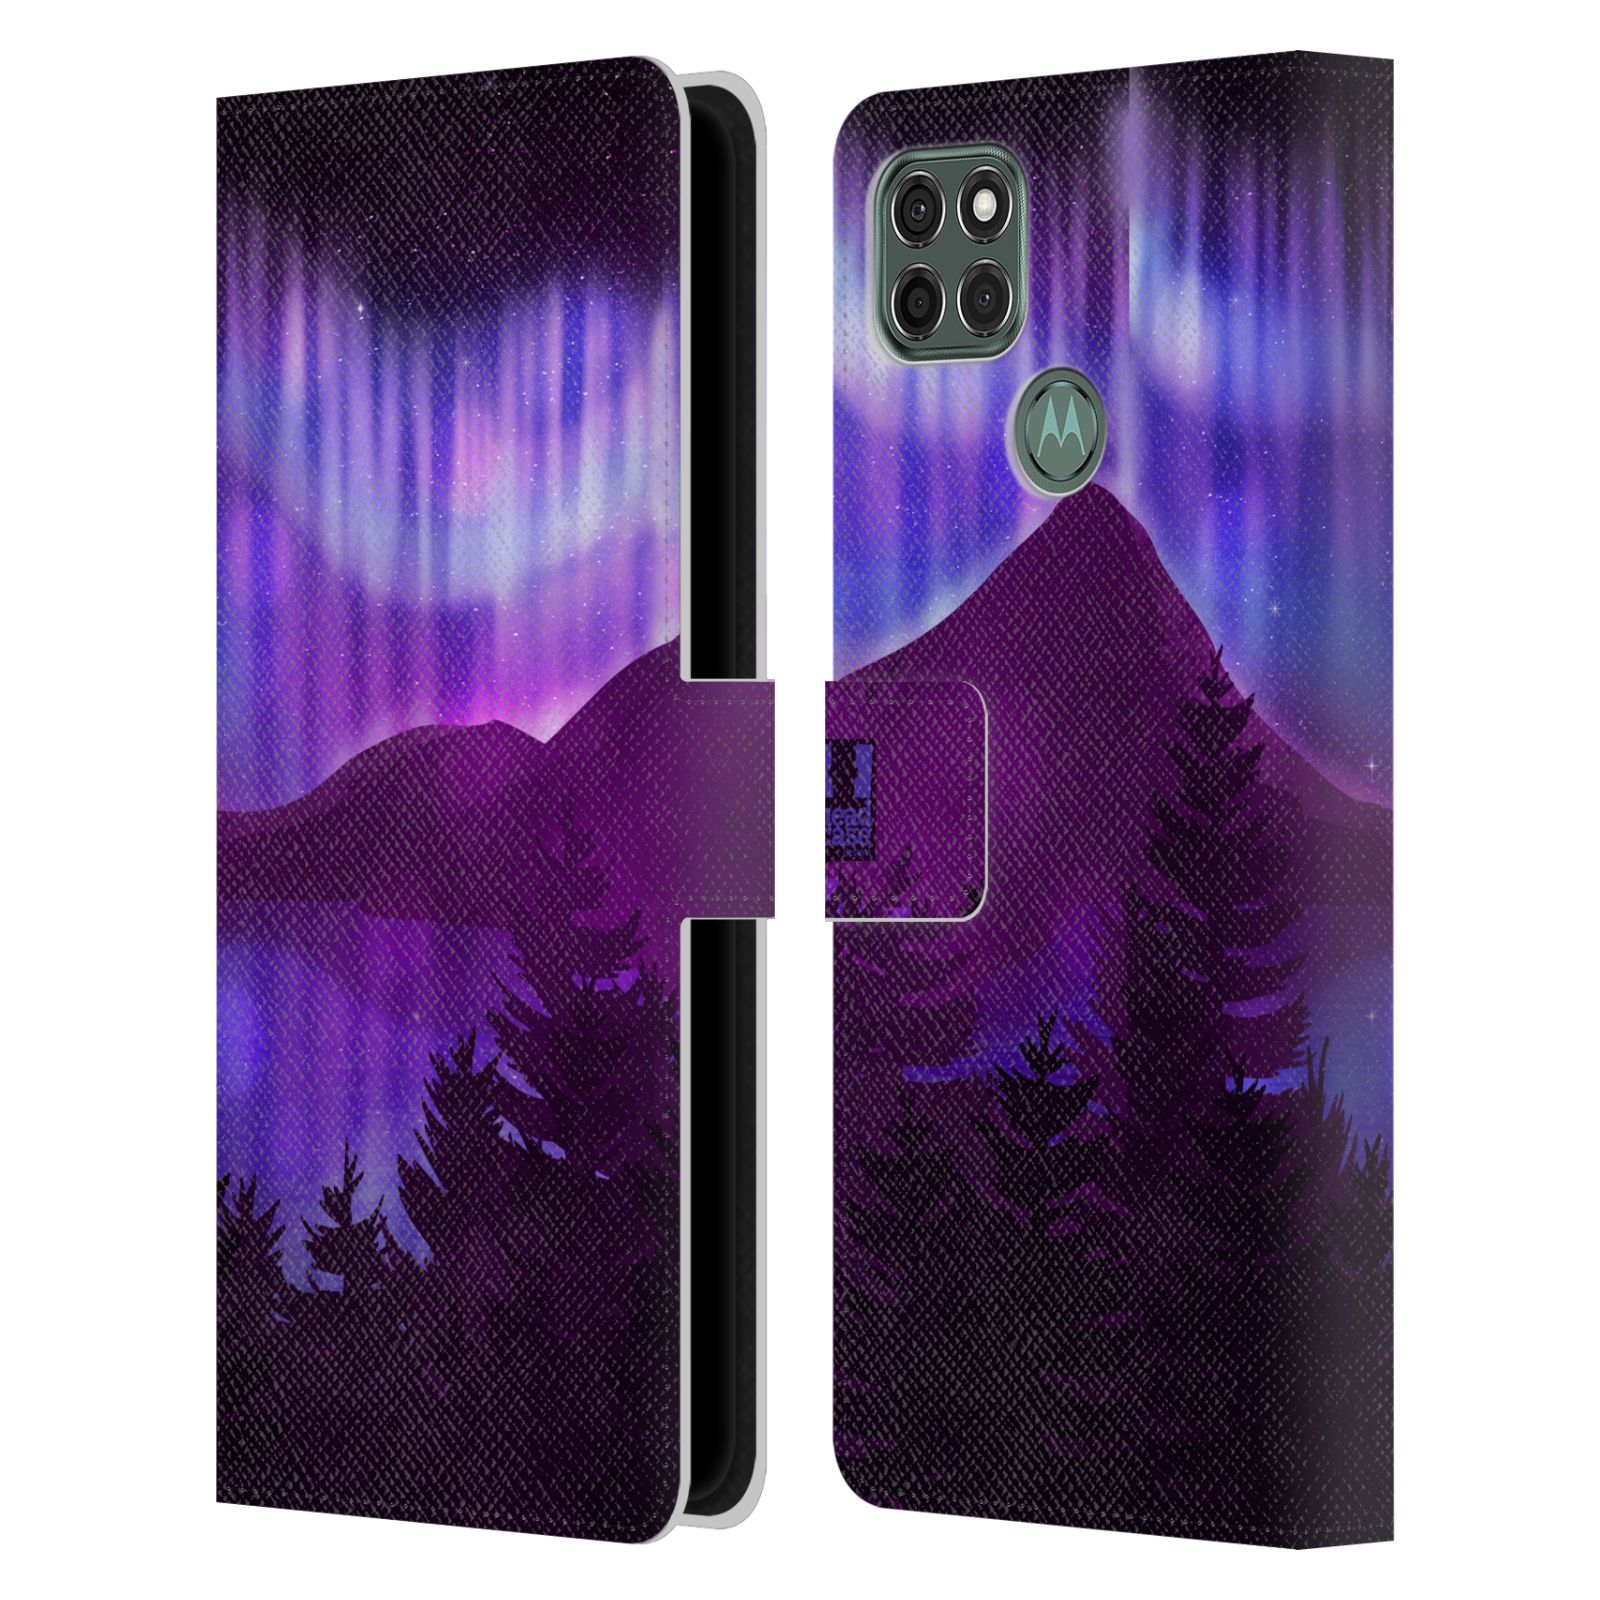 Pouzdro na mobil Motorola Moto G9 POWER - HEAD CASE - Hory a lesy fialový odstín